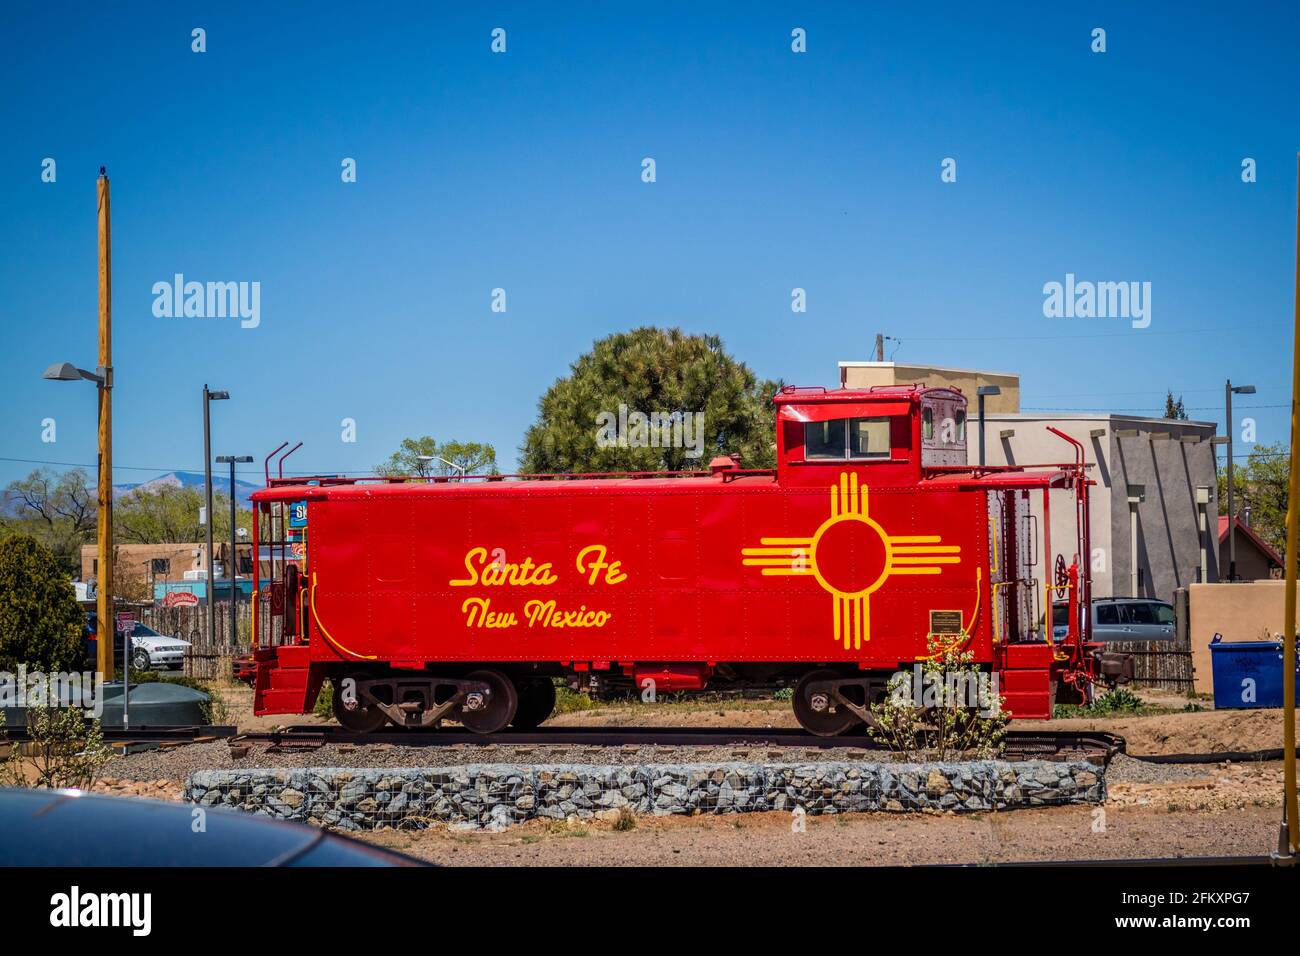 Santa Fe, NM, USA - April 14, 2018: An old fashioned scenic railroad c Stock Photo